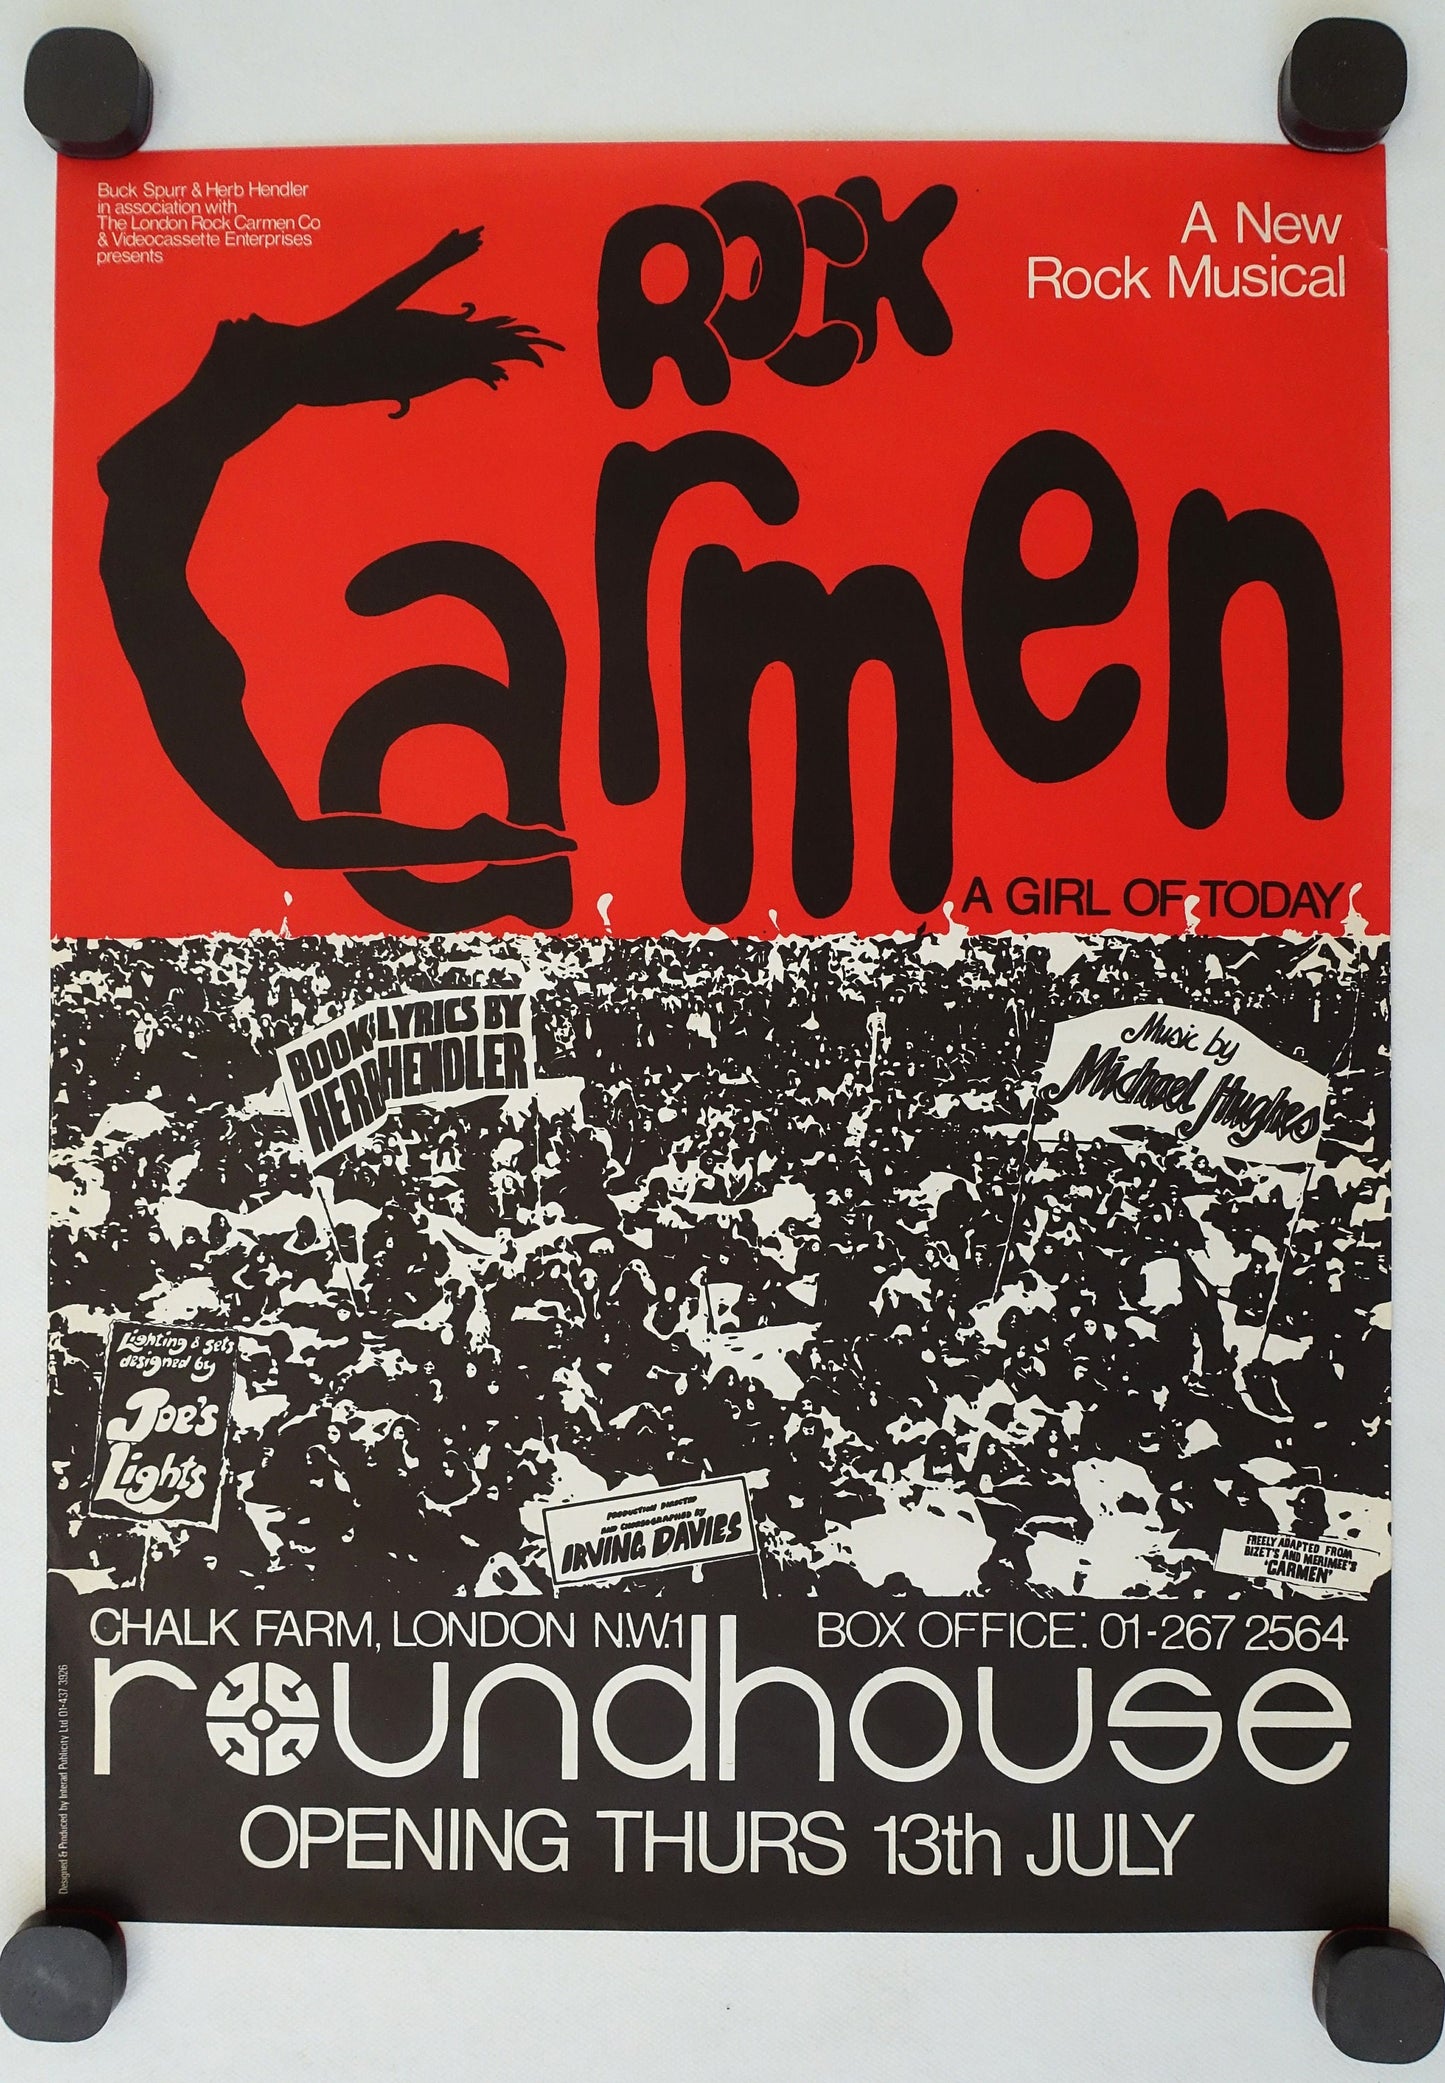 1970s Rock Carmen Musical at Roundhouse London - Original Vintage Poster